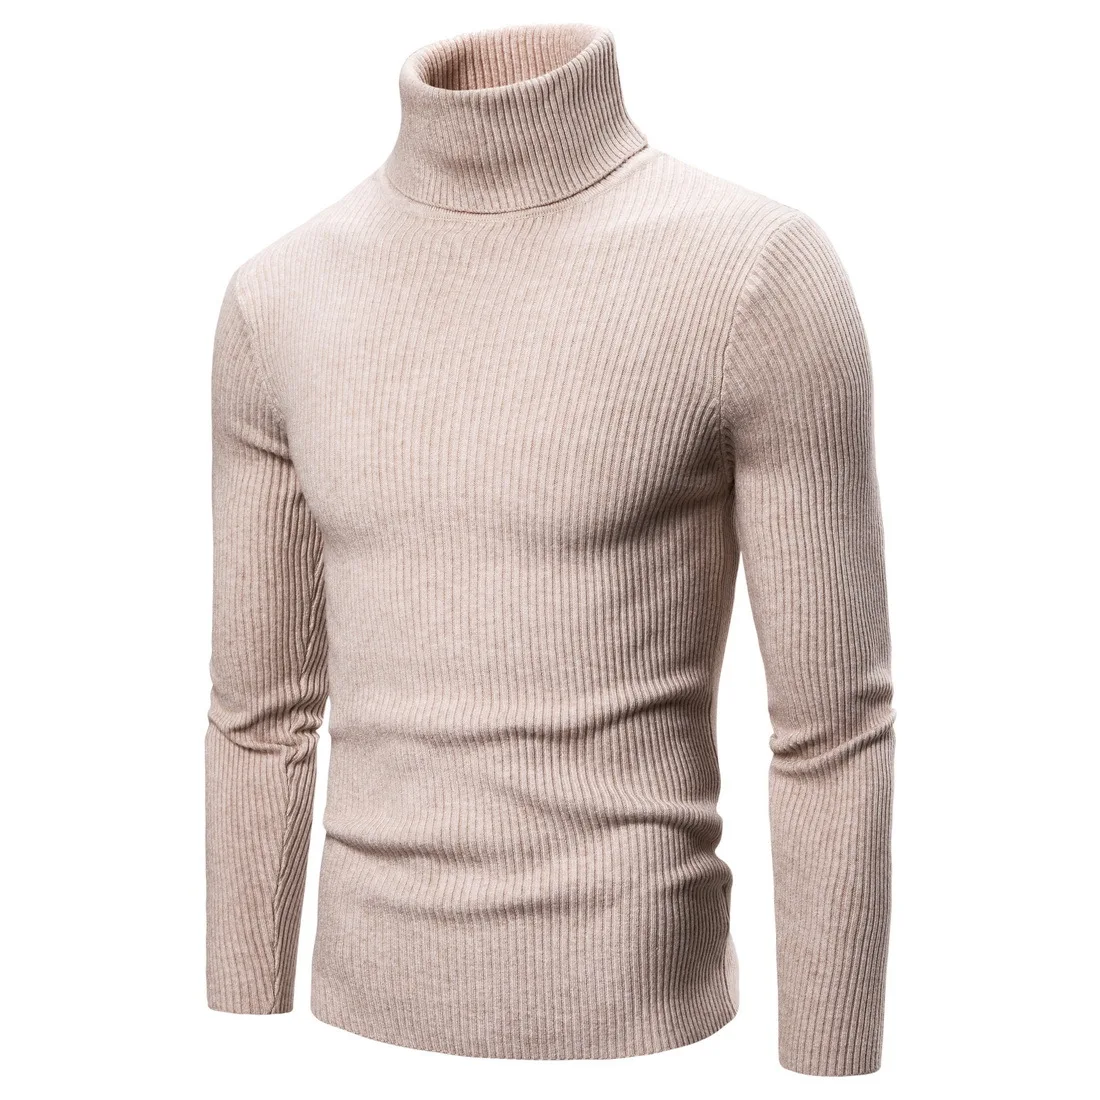 New Streetwear Men's Winter Warm Cotton High Neck Pullover Jumper Sweater